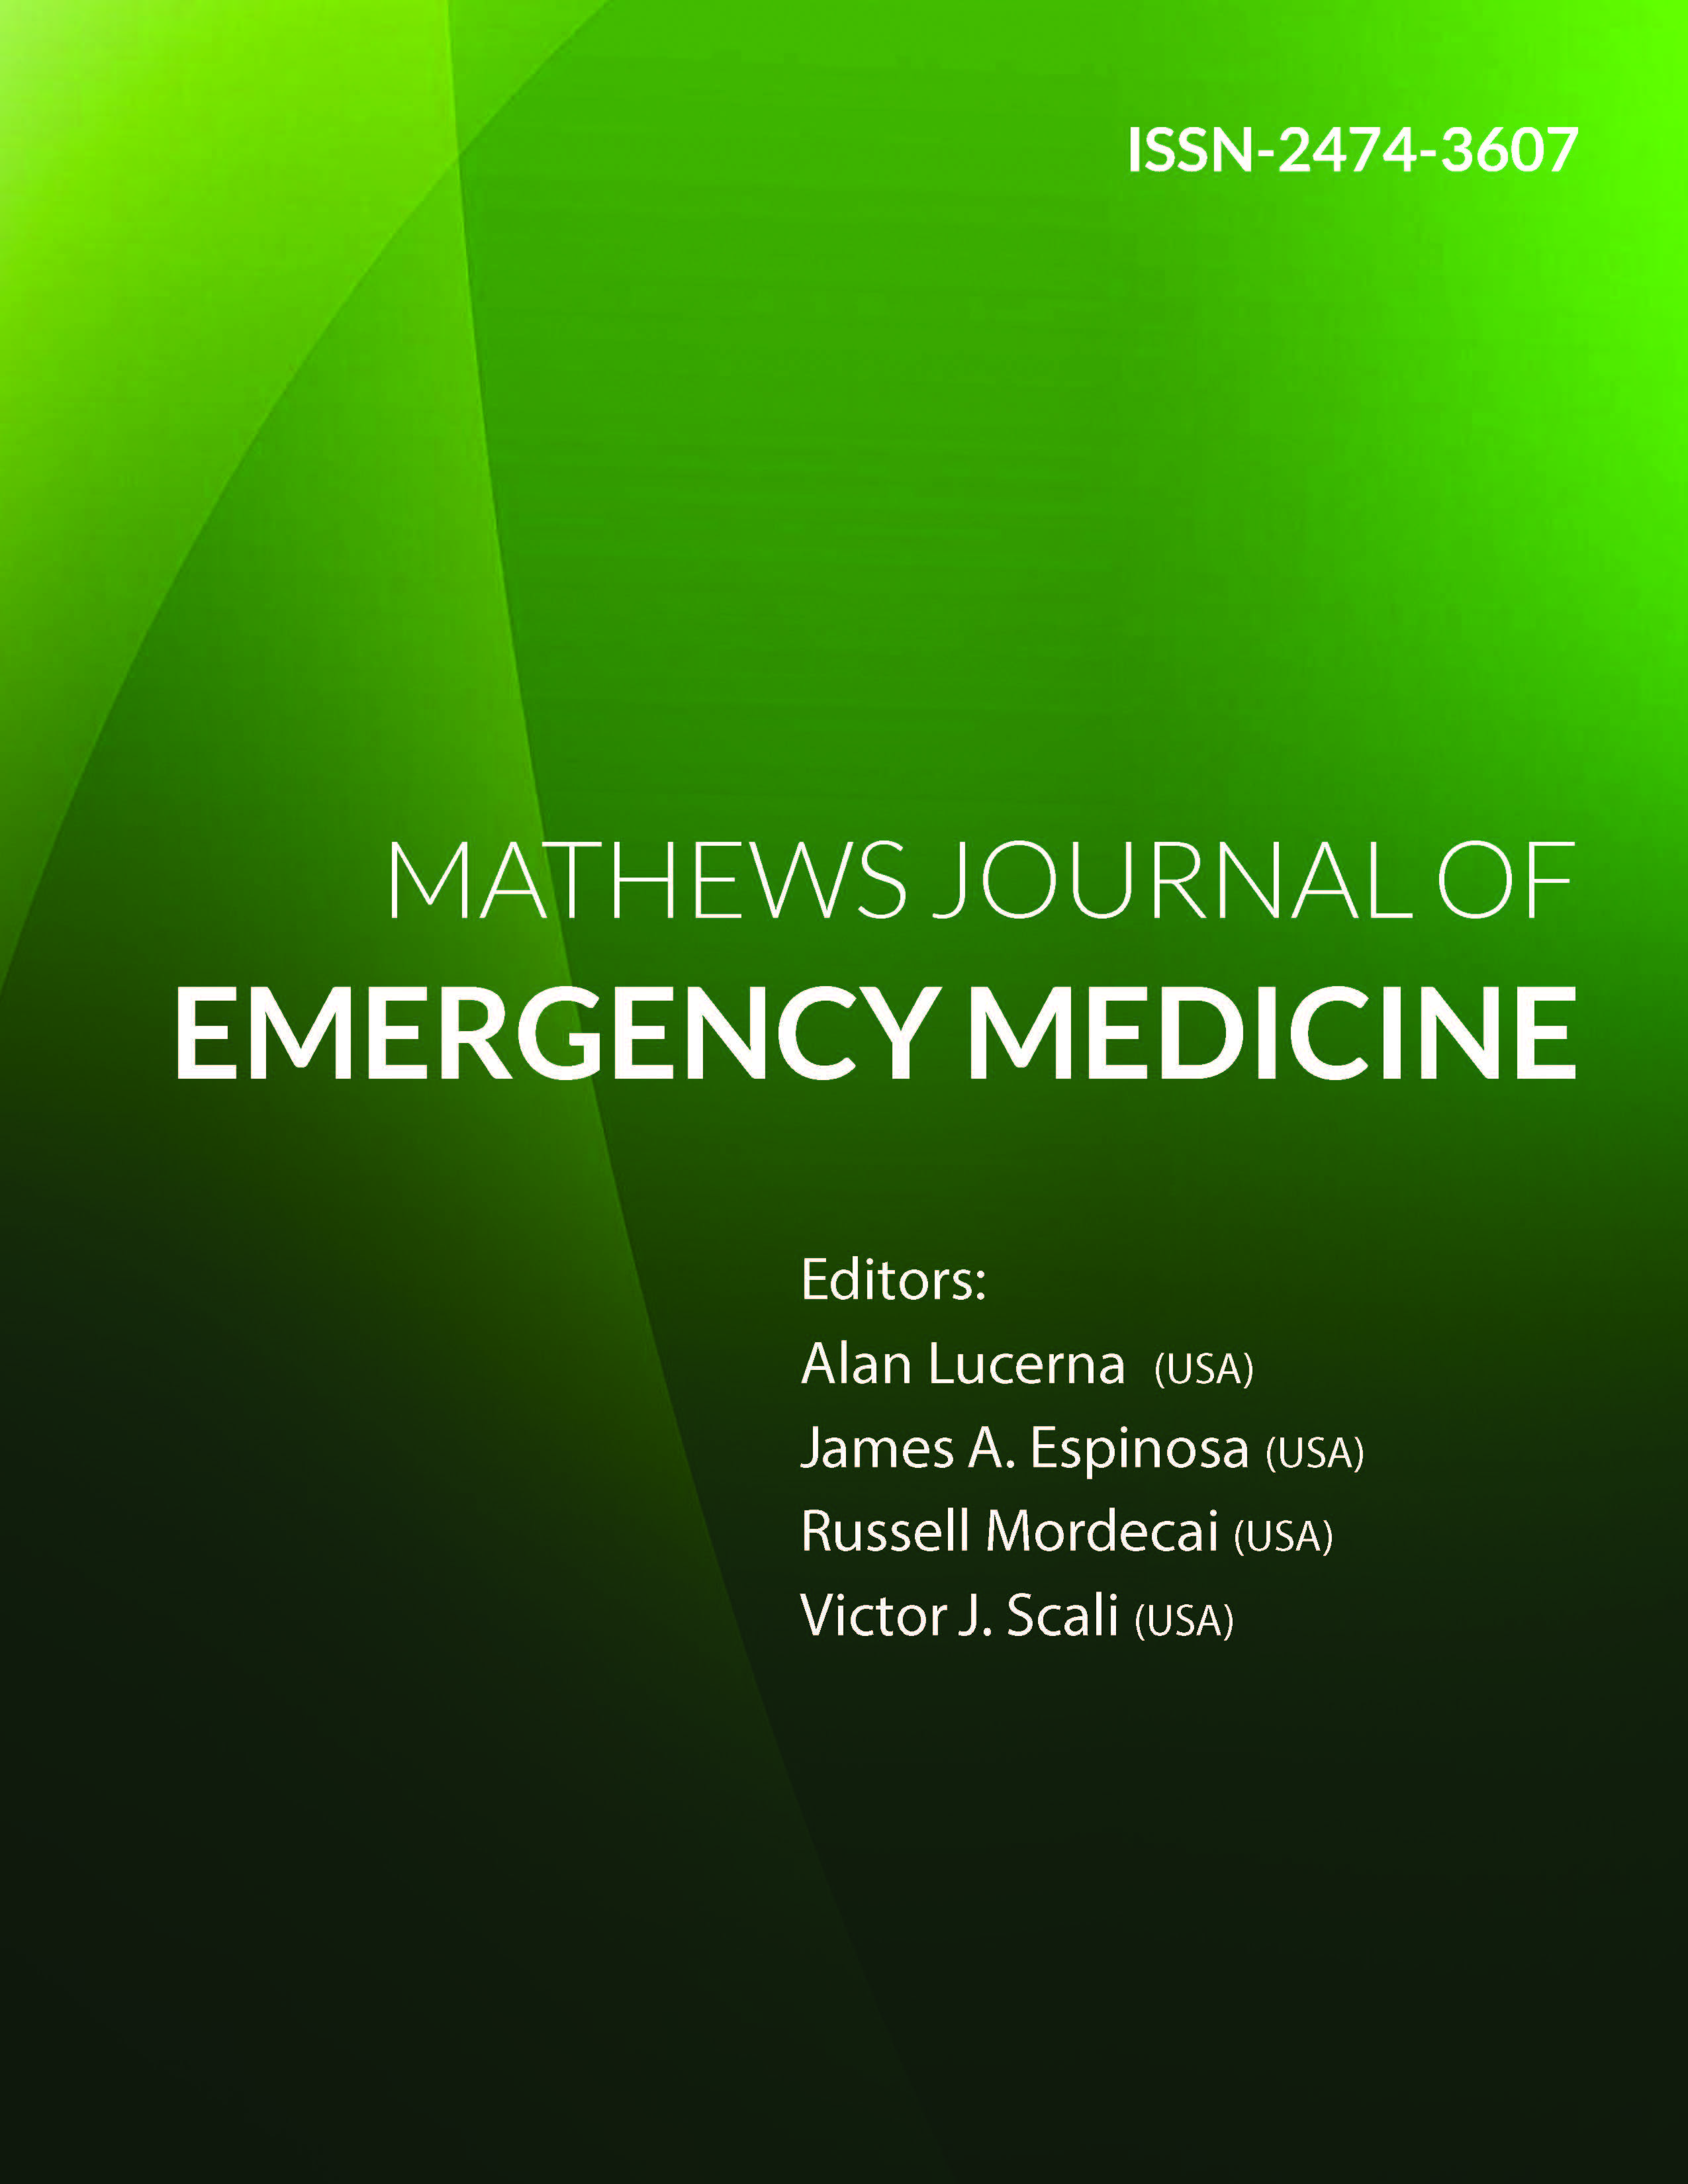 Previous Issues Emergency Medicine Open Access Journals Mathews